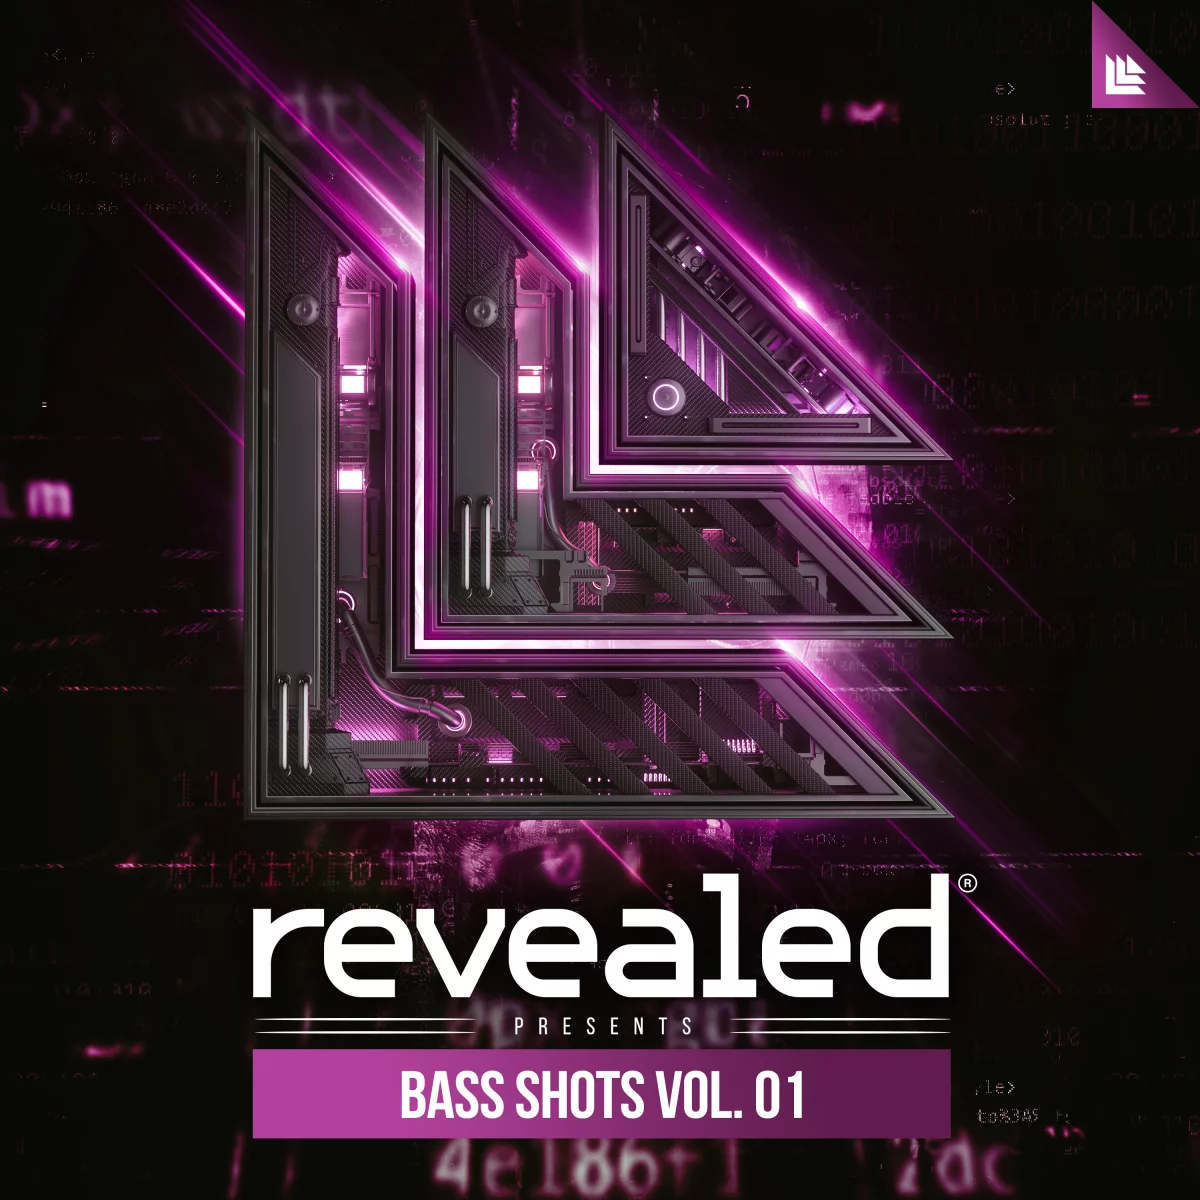 Revealed Bass Shots Vol. 1 - revealedrec⁠ 